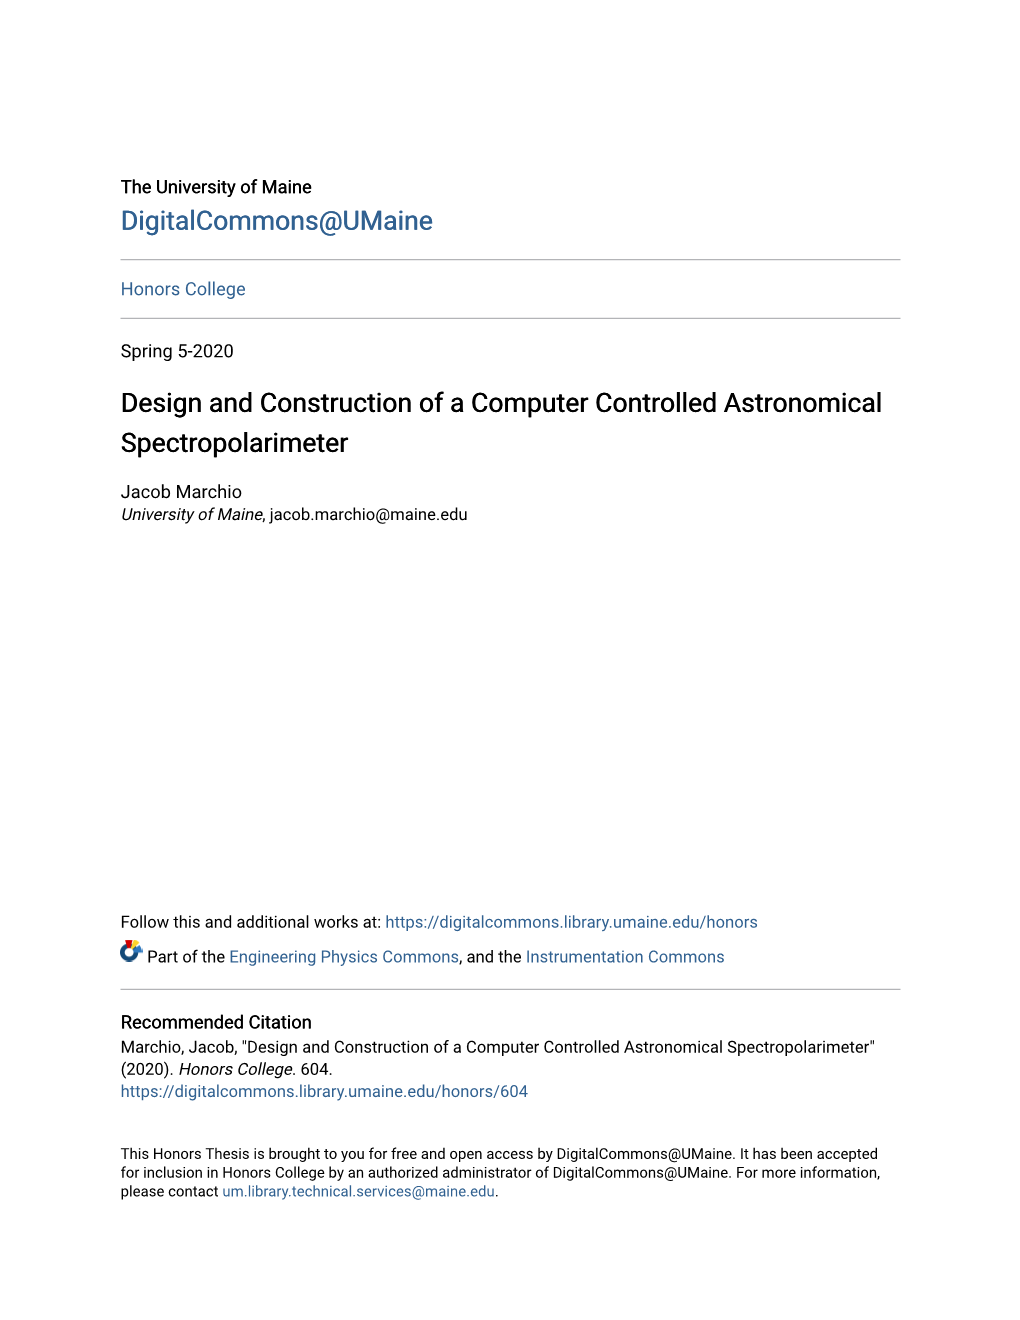 Design and Construction of a Computer Controlled Astronomical Spectropolarimeter